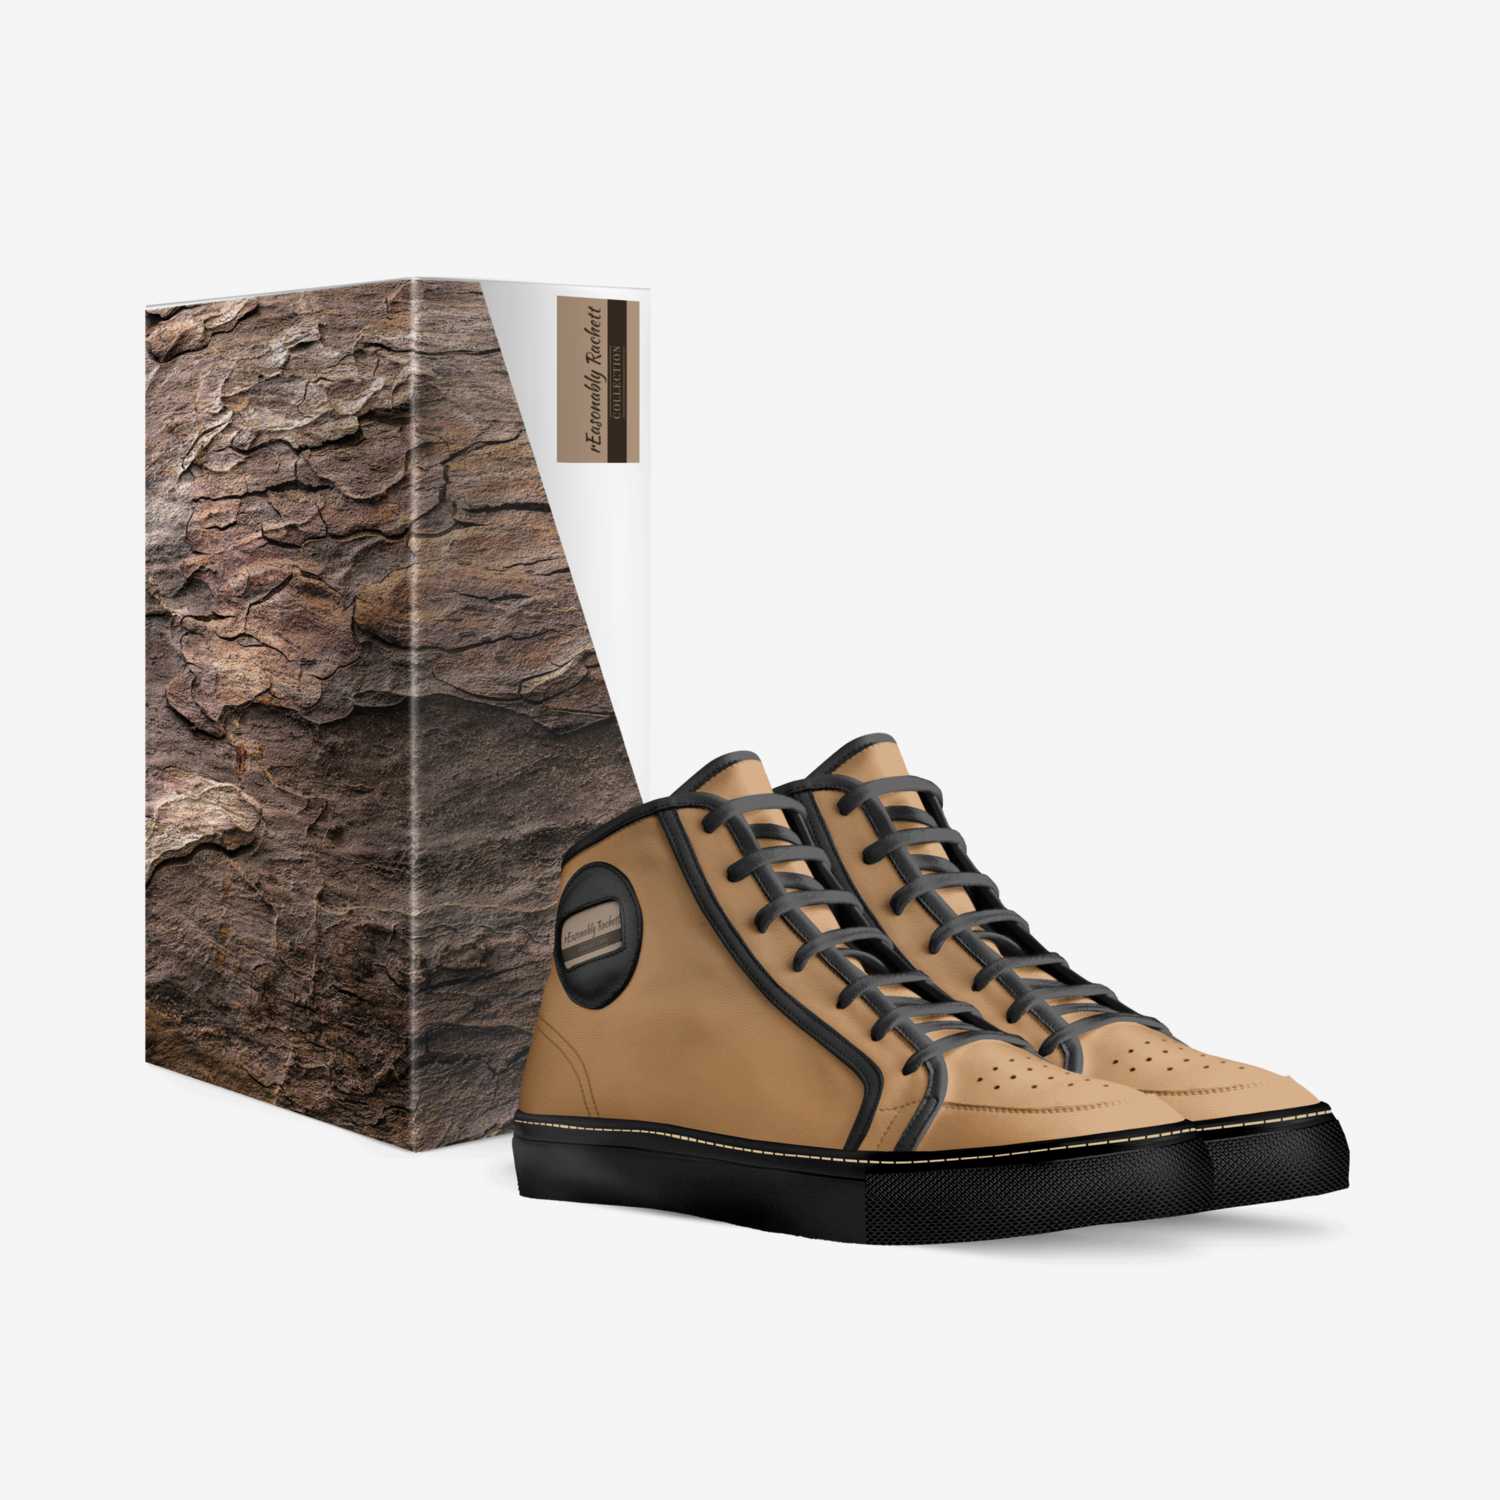 rEasonably Rachett custom made in Italy shoes by Bonnie A Eason | Box view